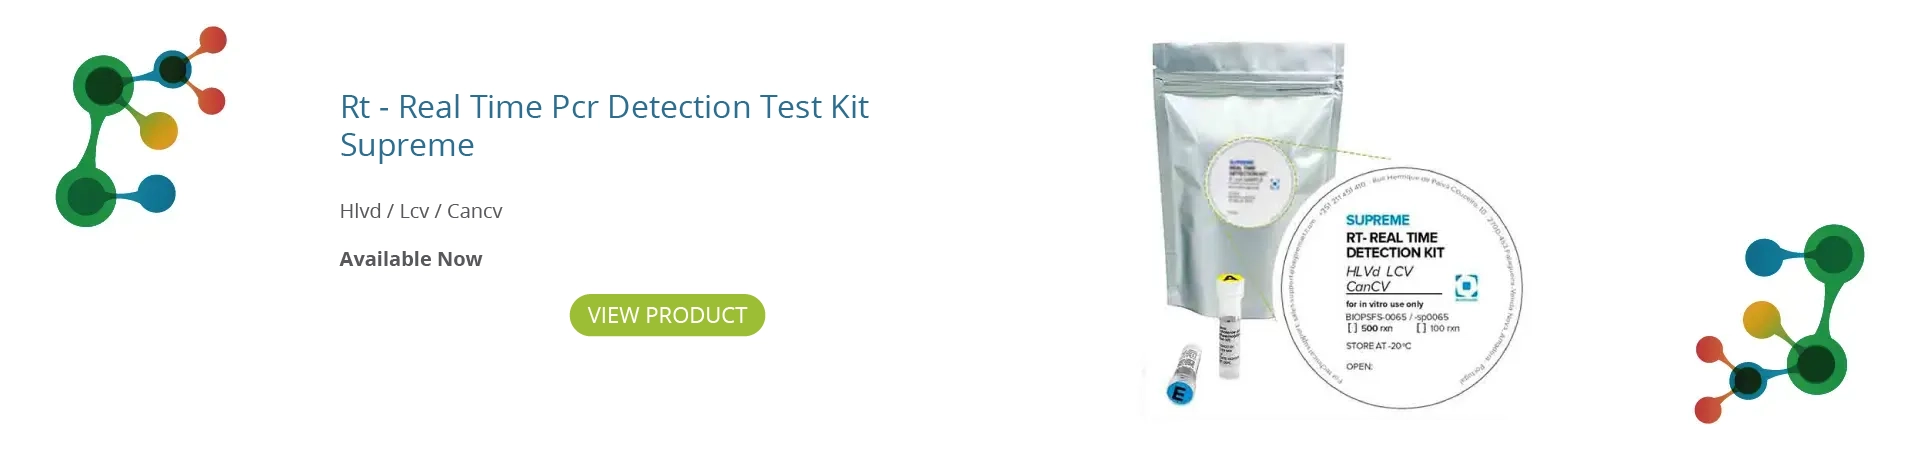 Rt - Real Time Pcr Detection Test Kit Supreme